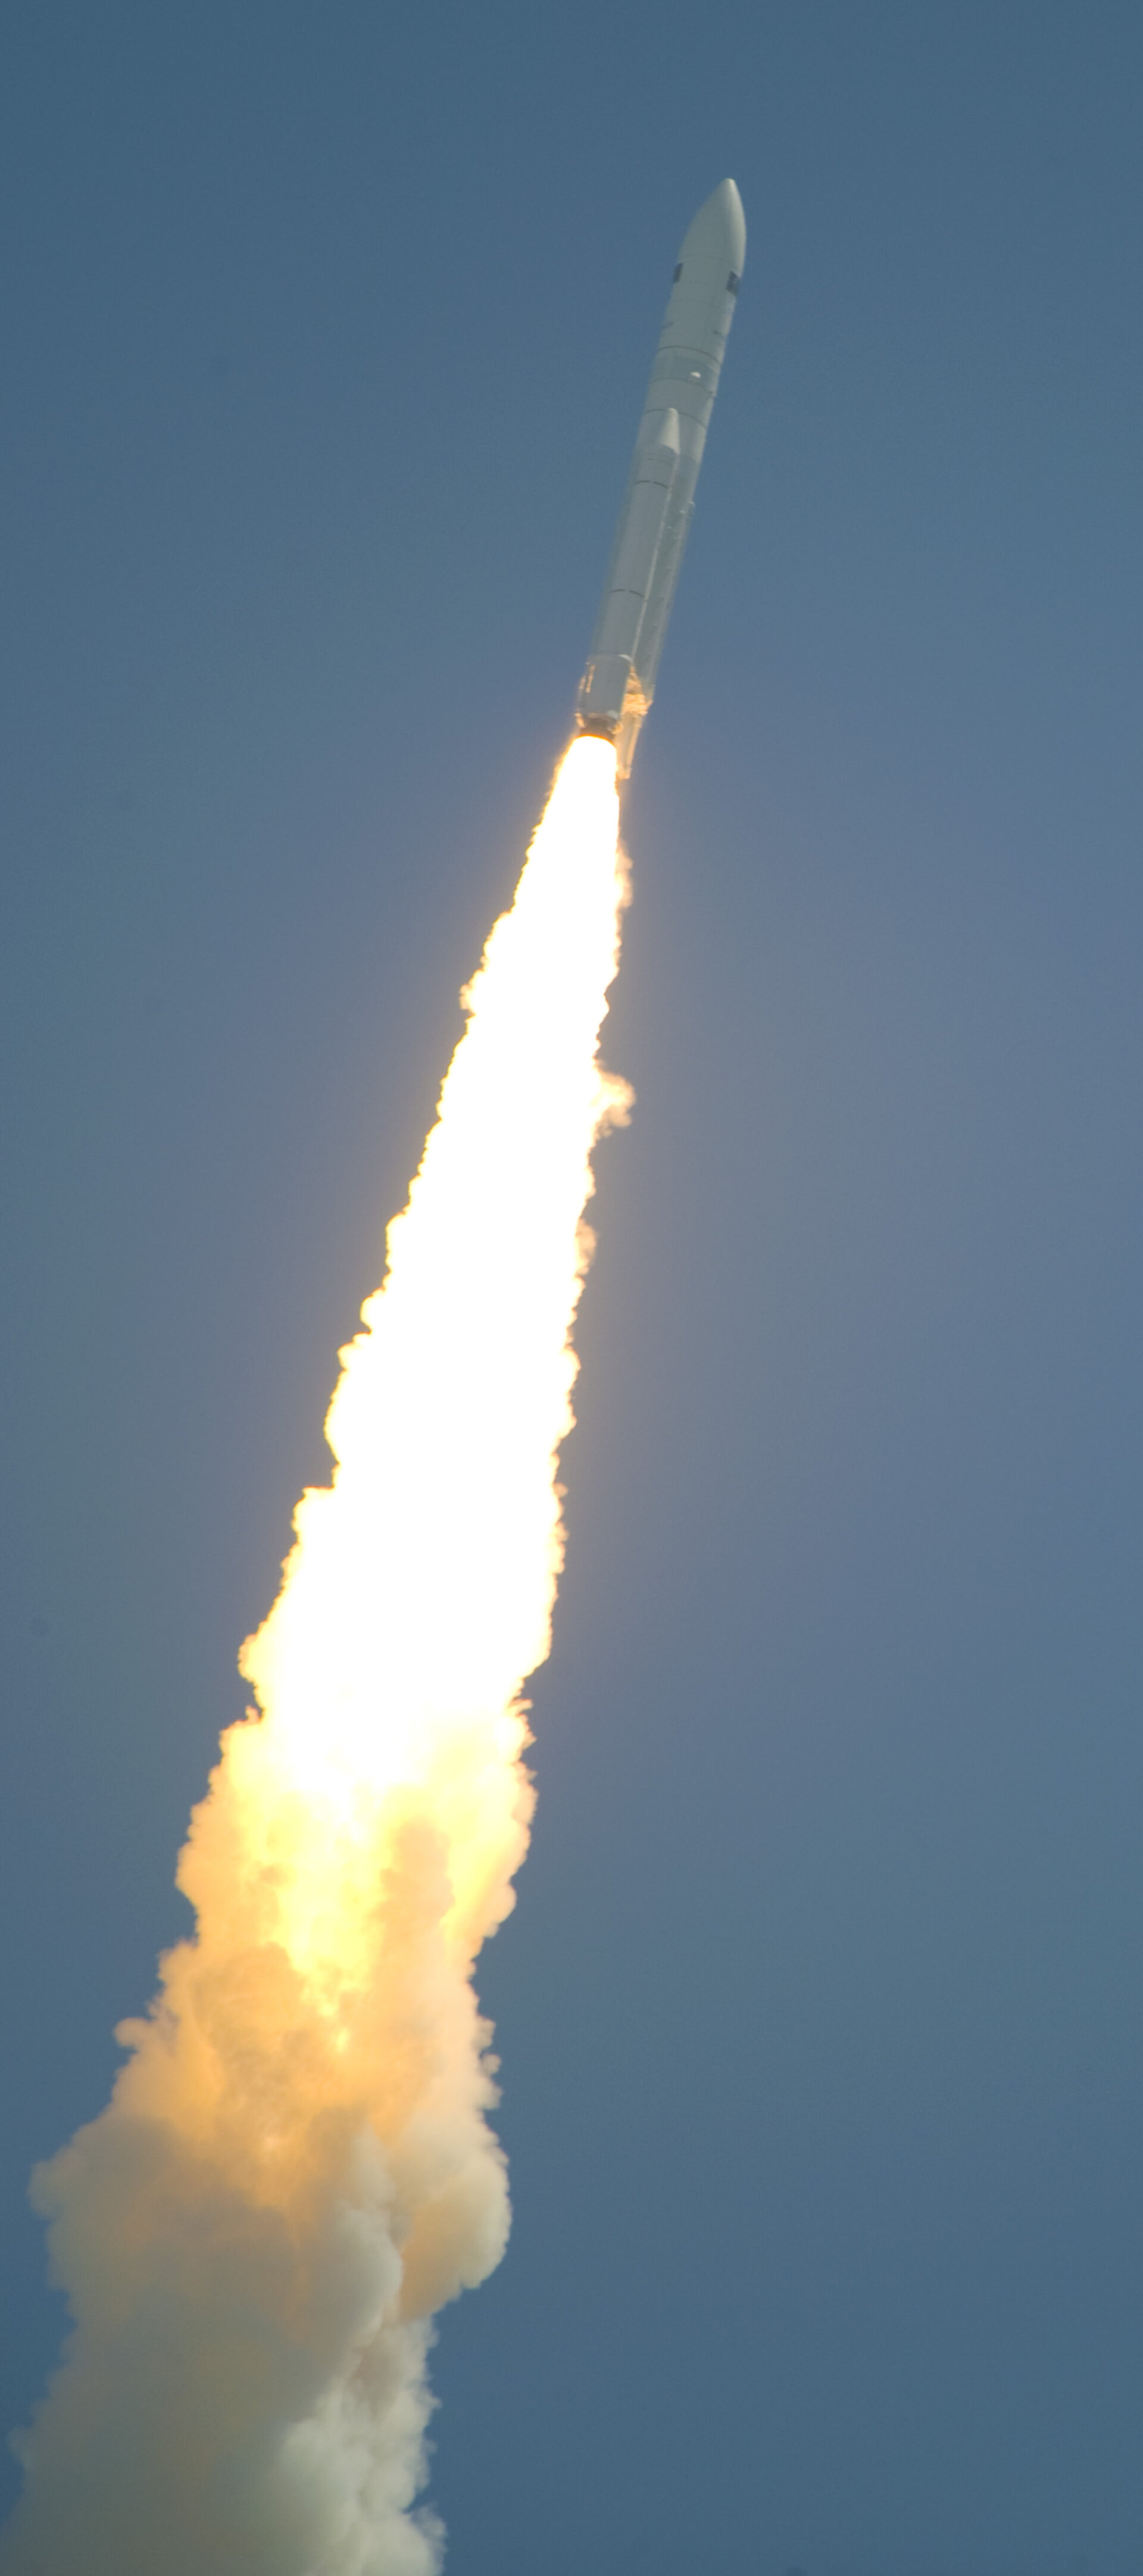 Ariane 5 lift off